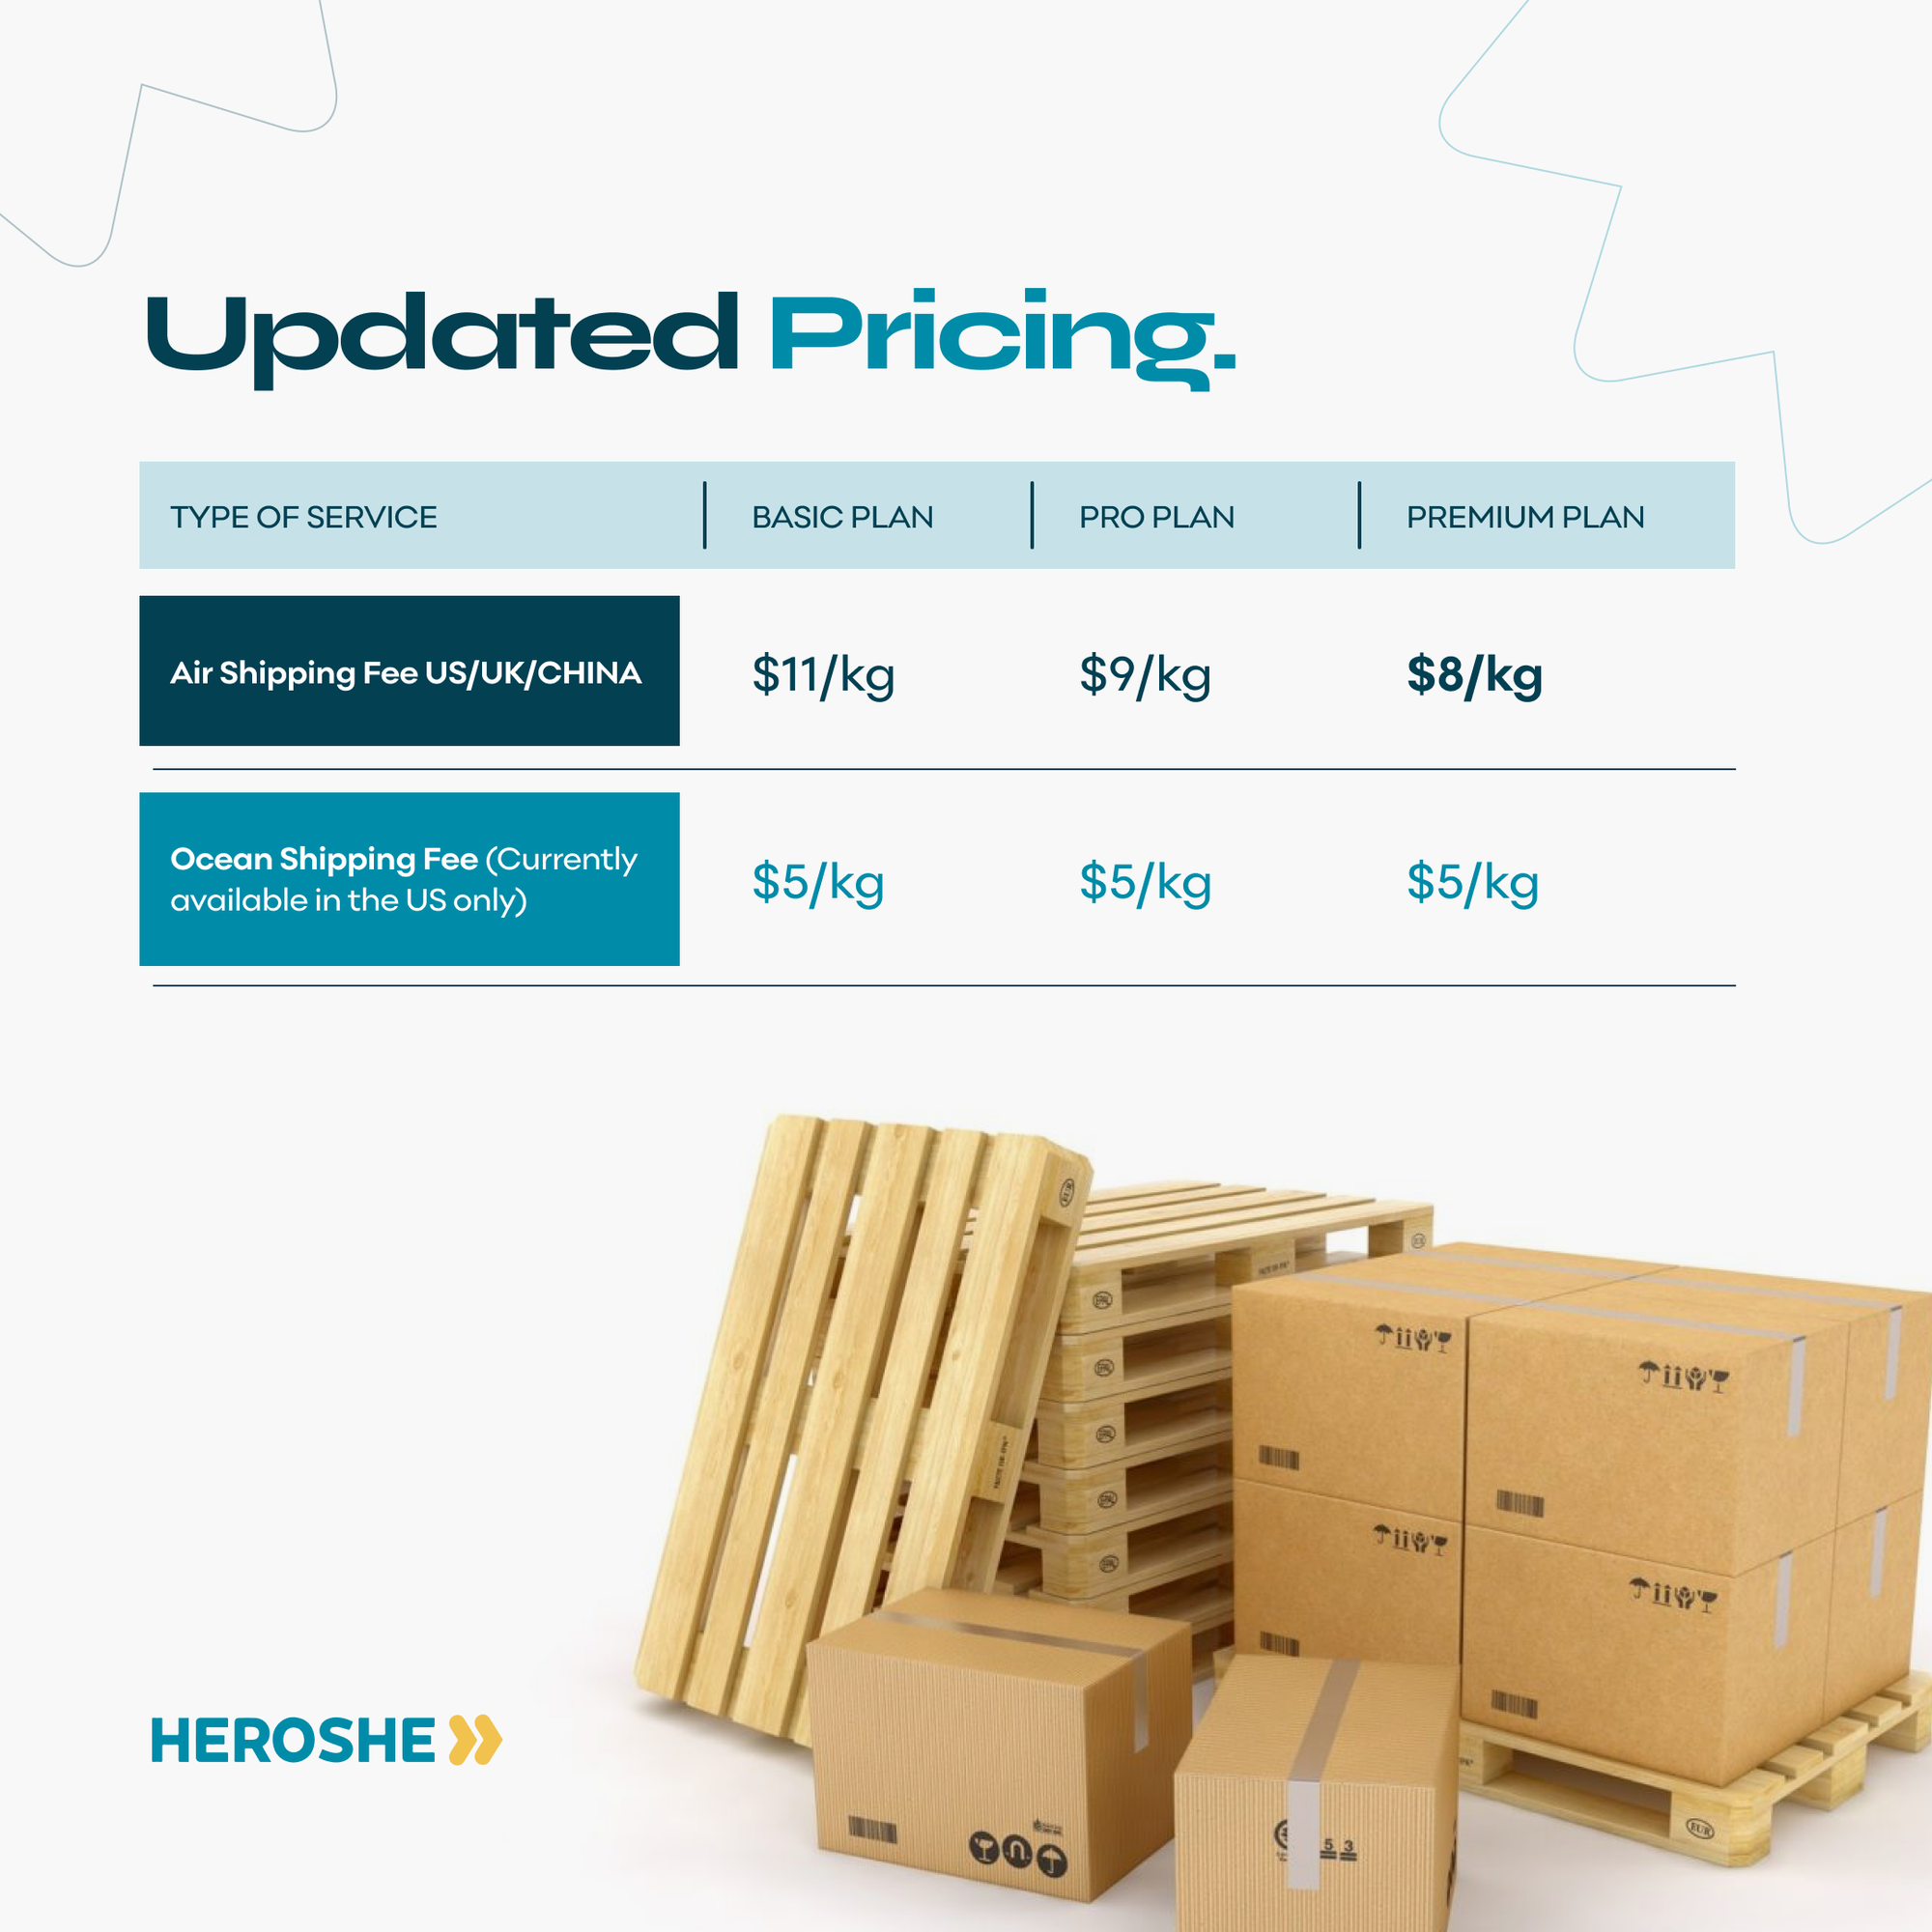 Heroshe new pricing